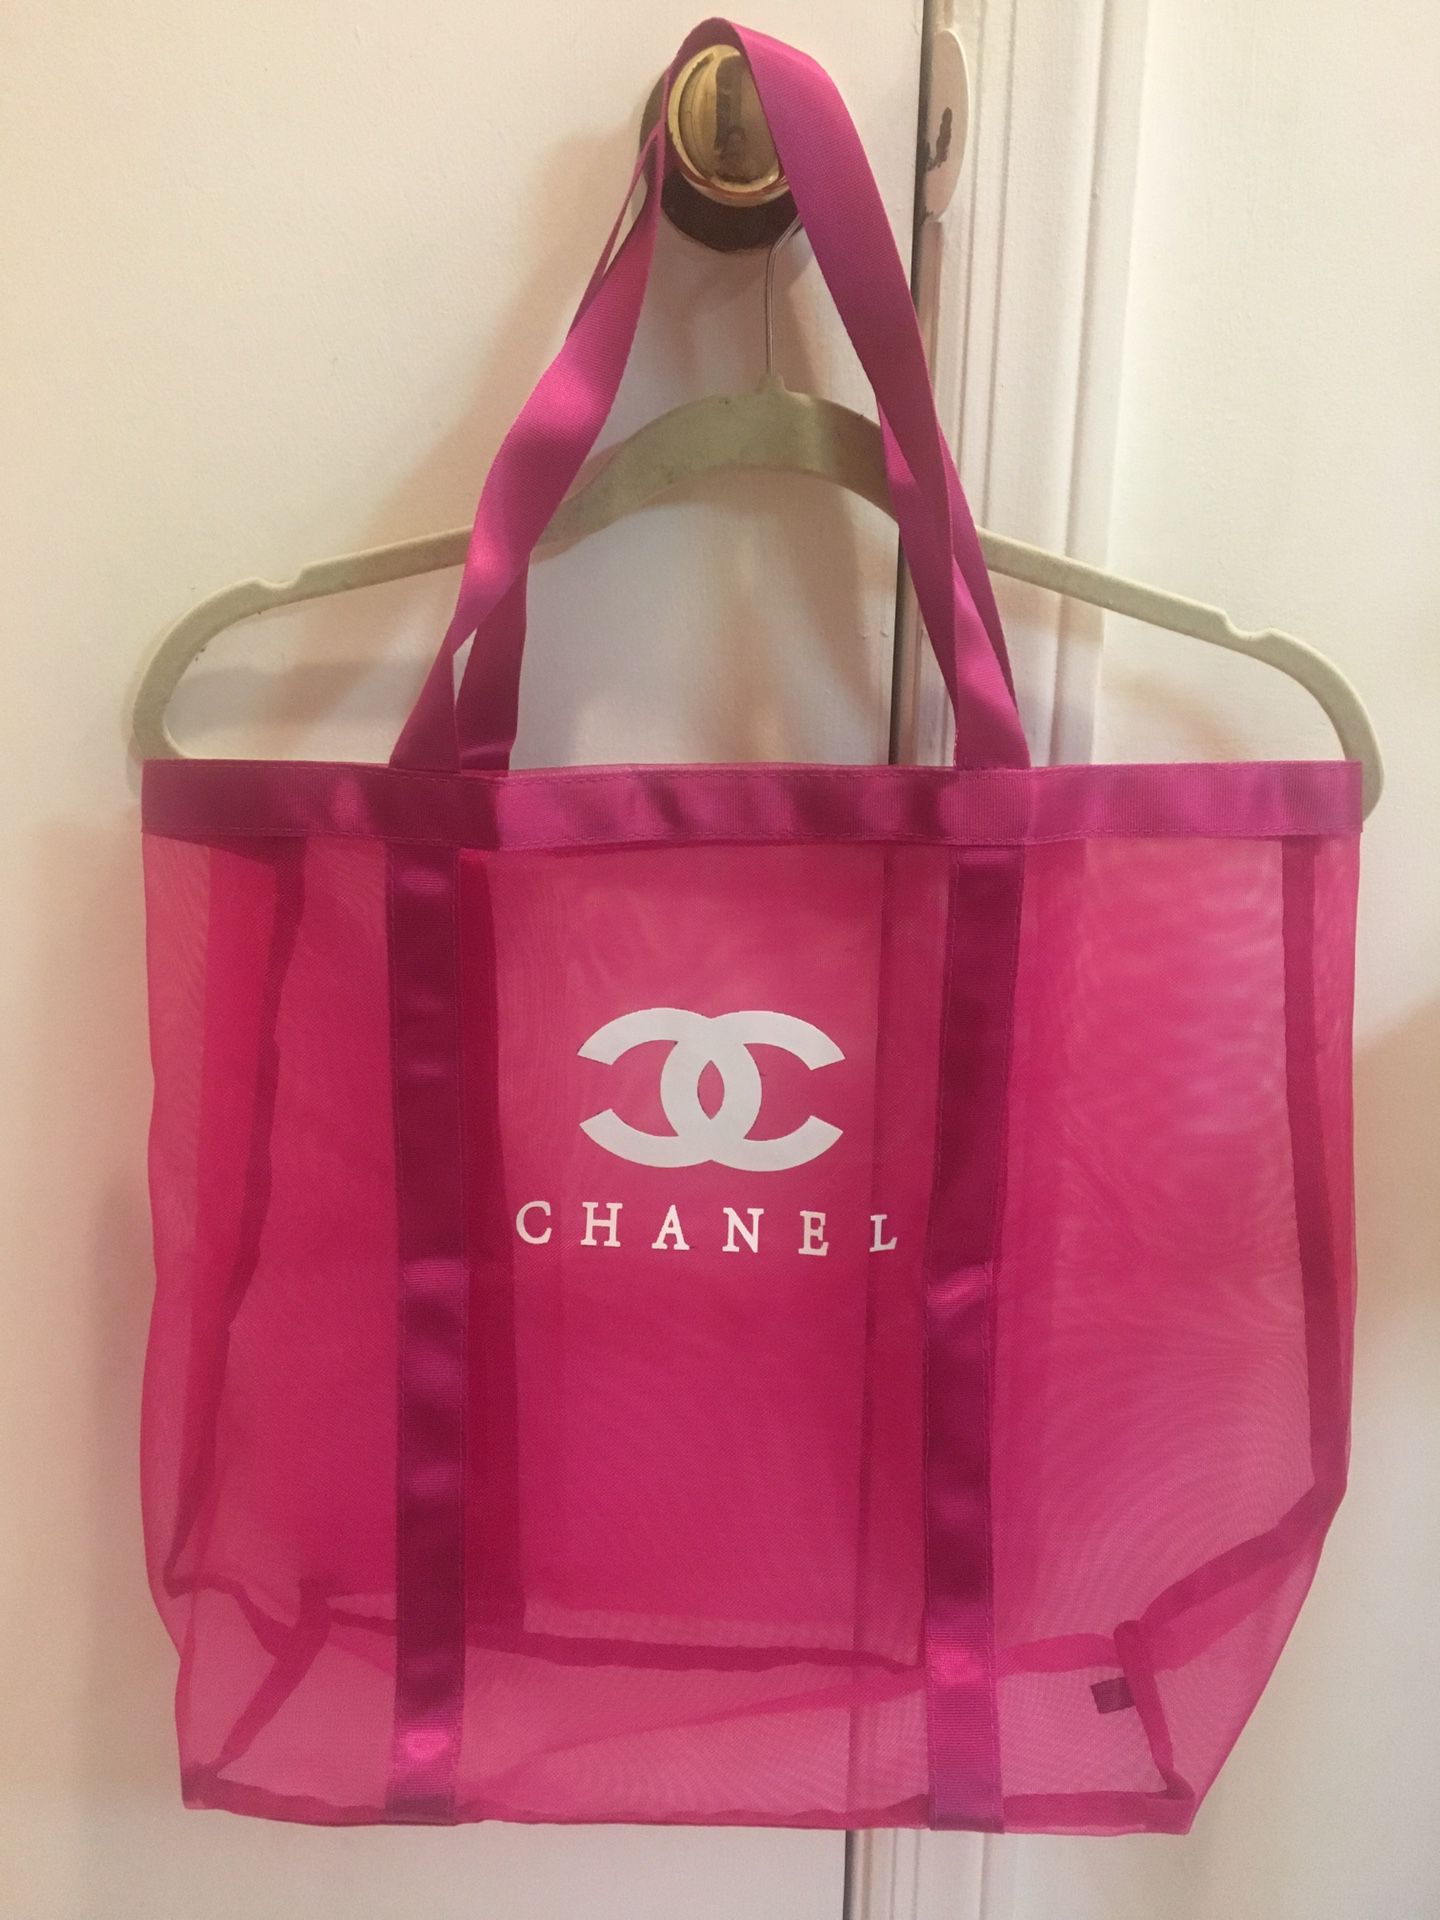 Chanel Brand New Tote